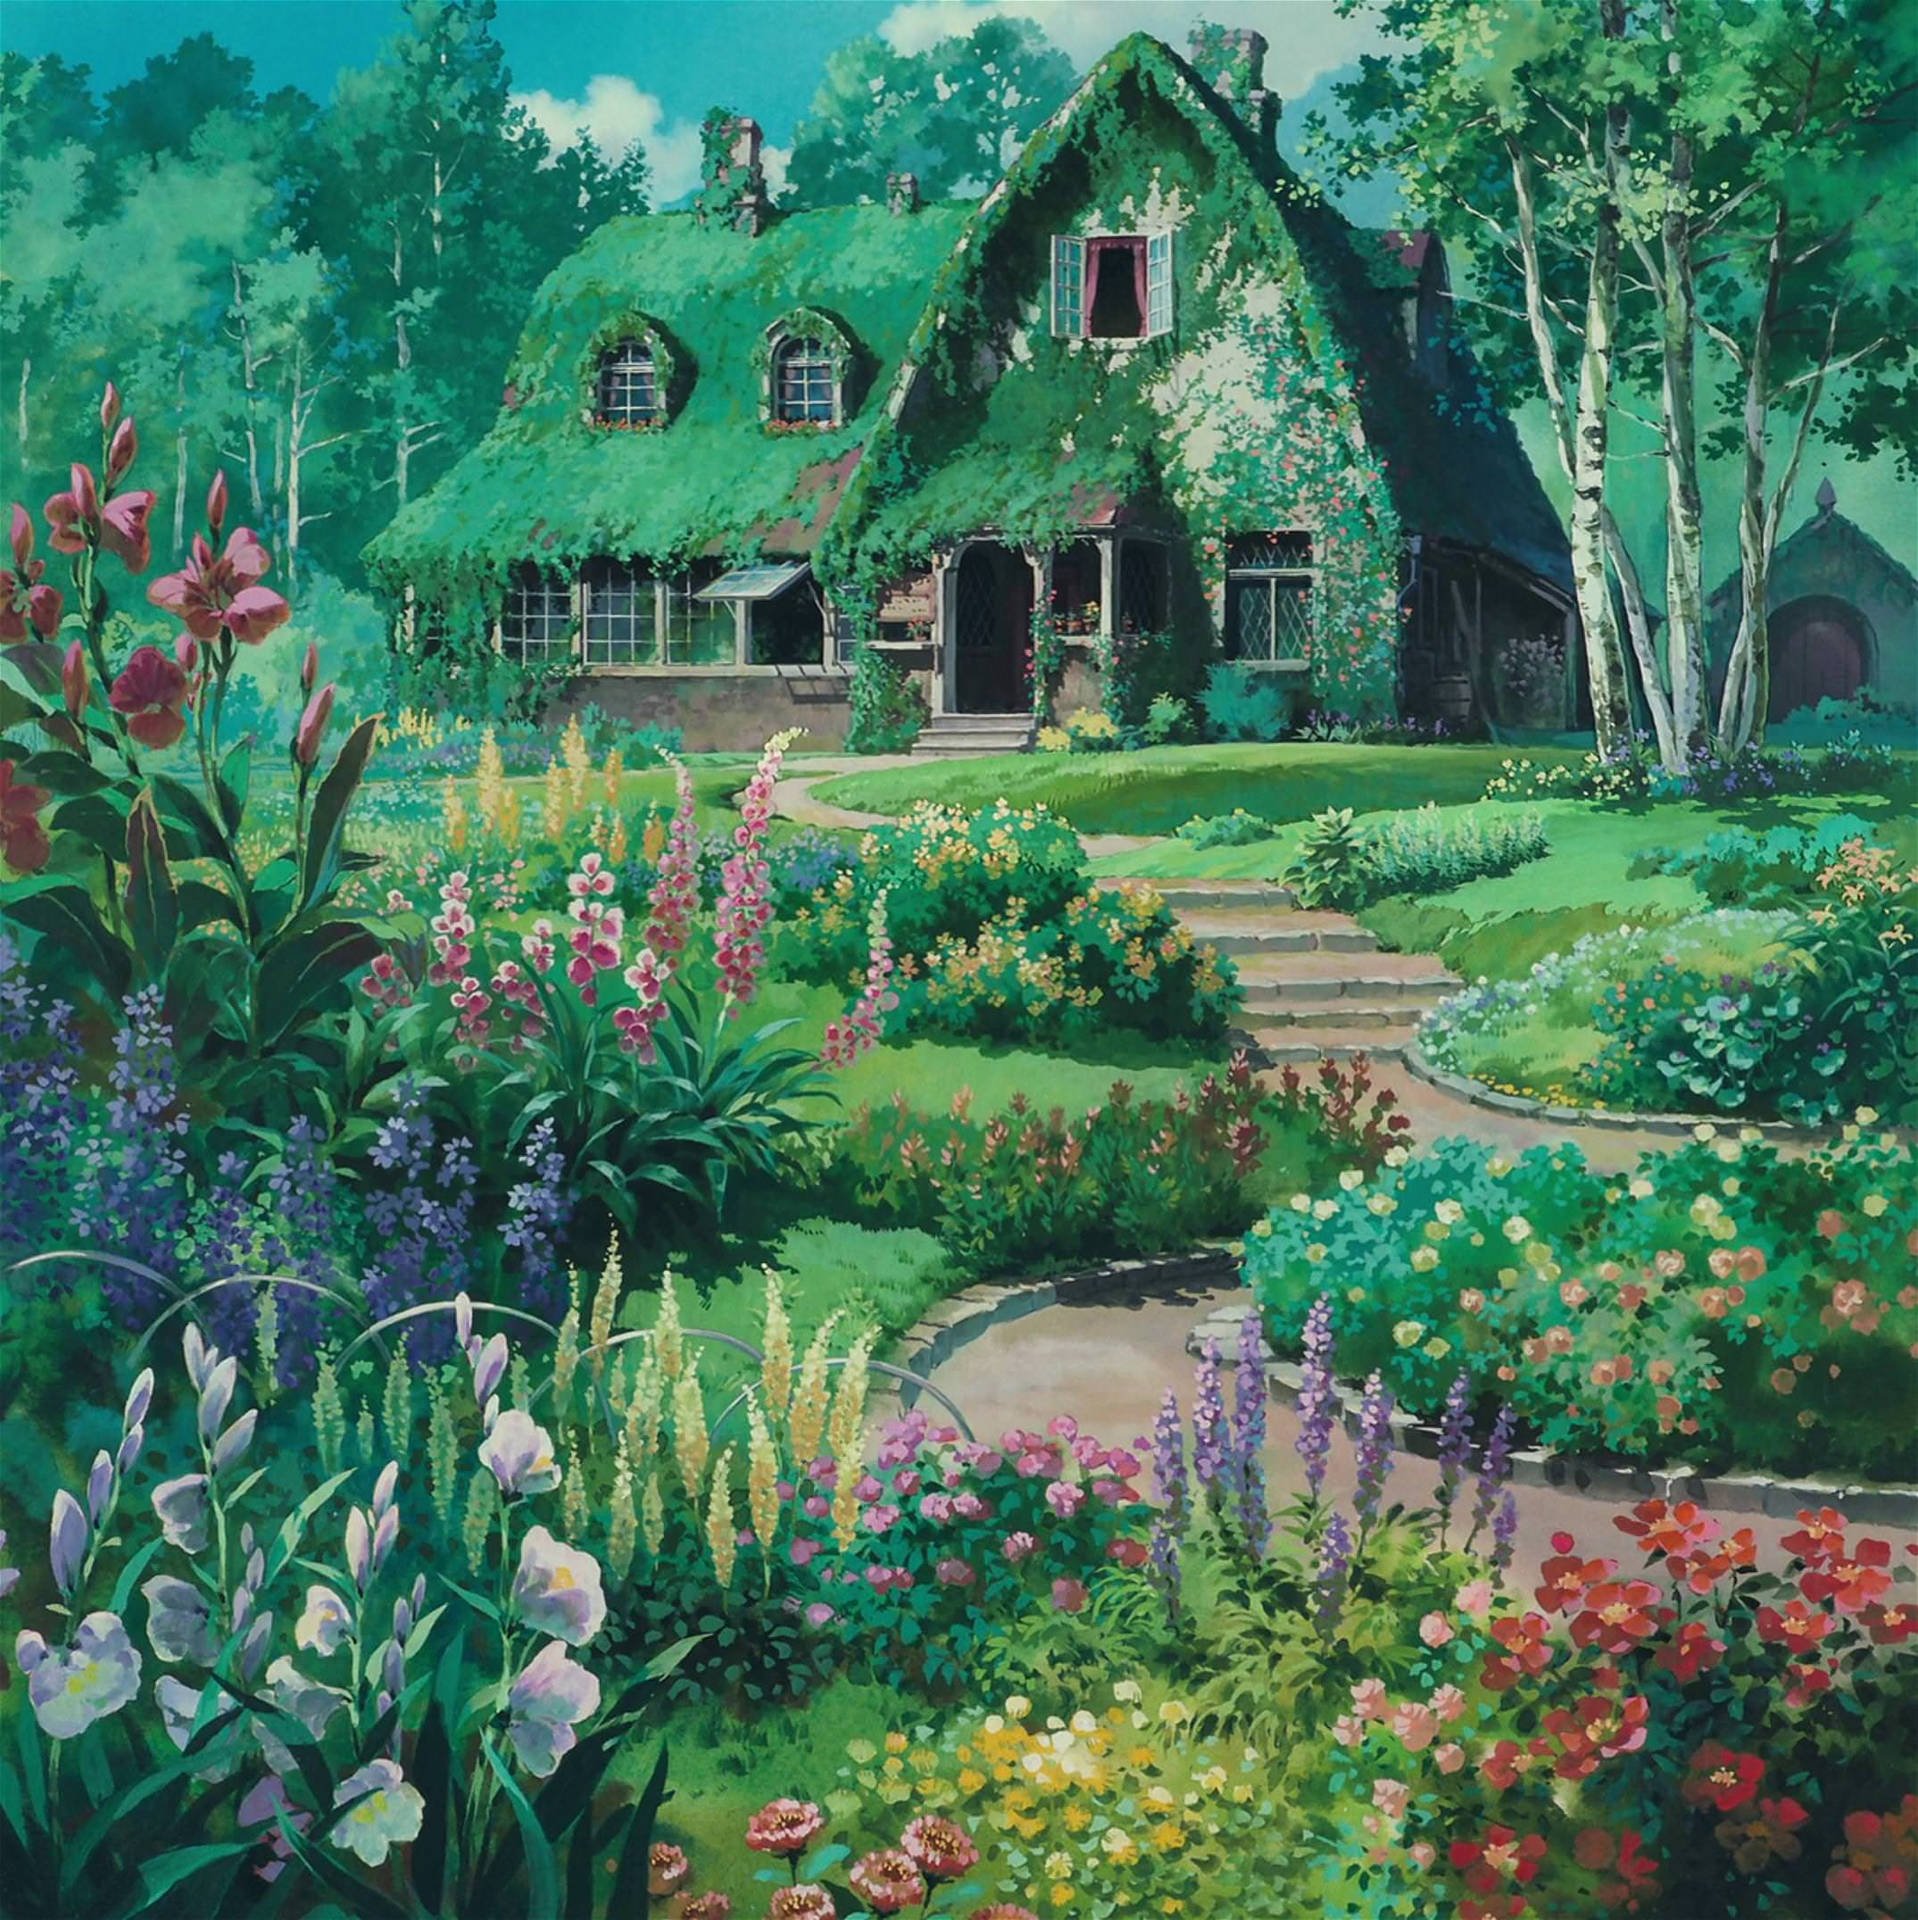 Download Studio Ghibli Scenery House With Garden Wallpaper